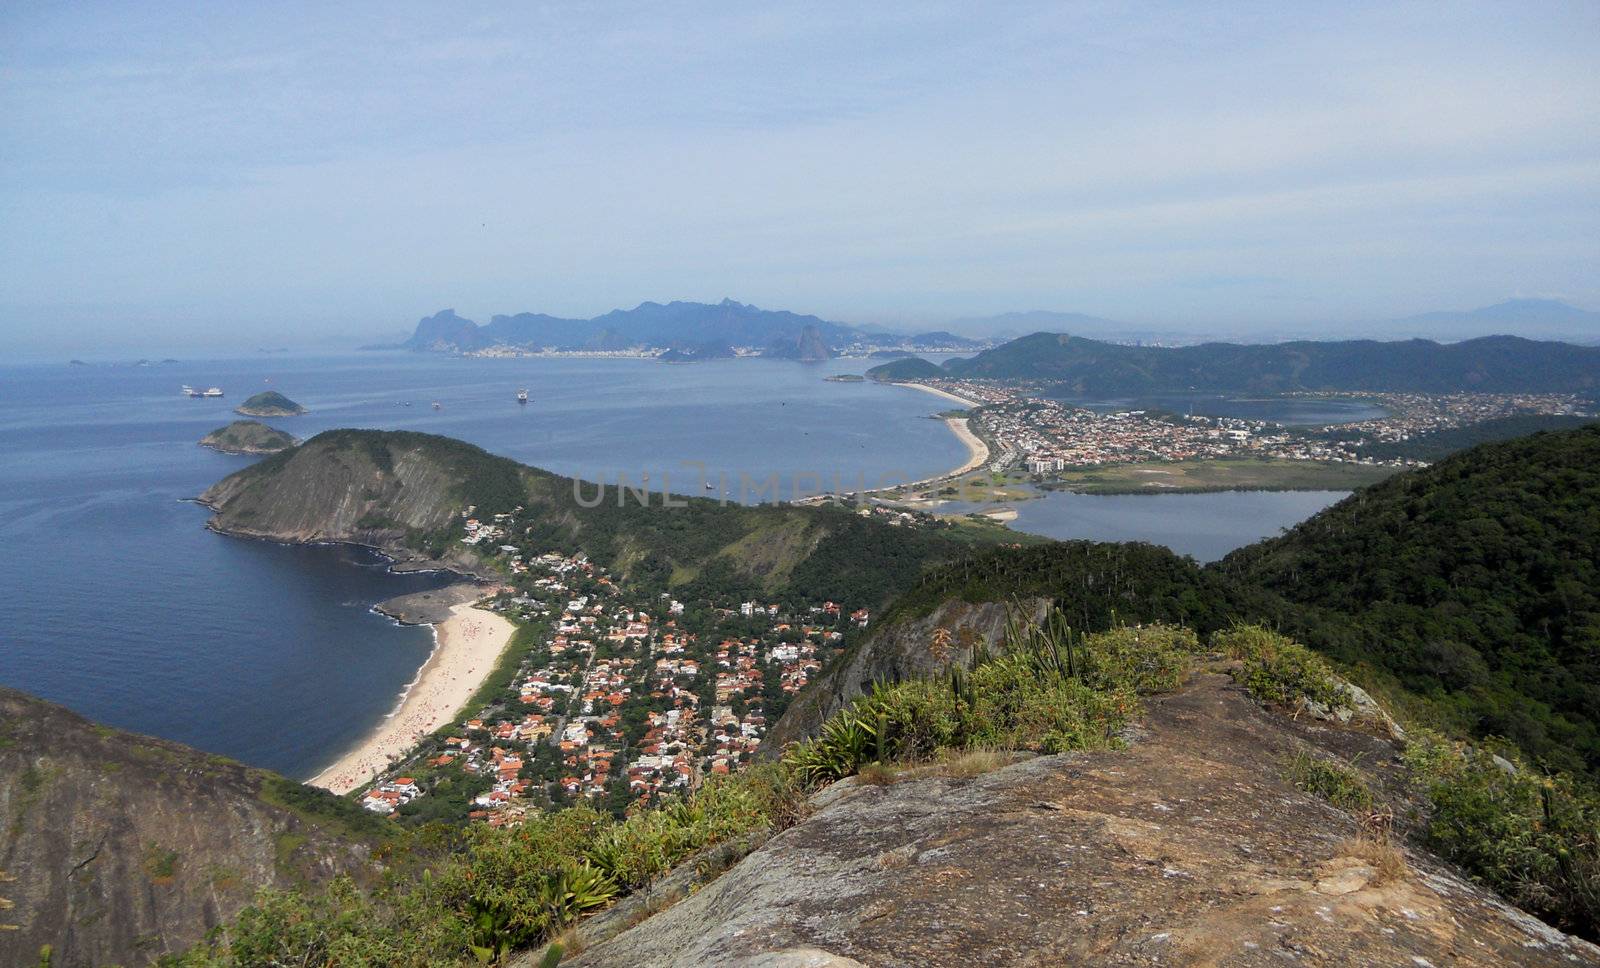 Niteroi and Rio de Janeiro Coastline by eldervs